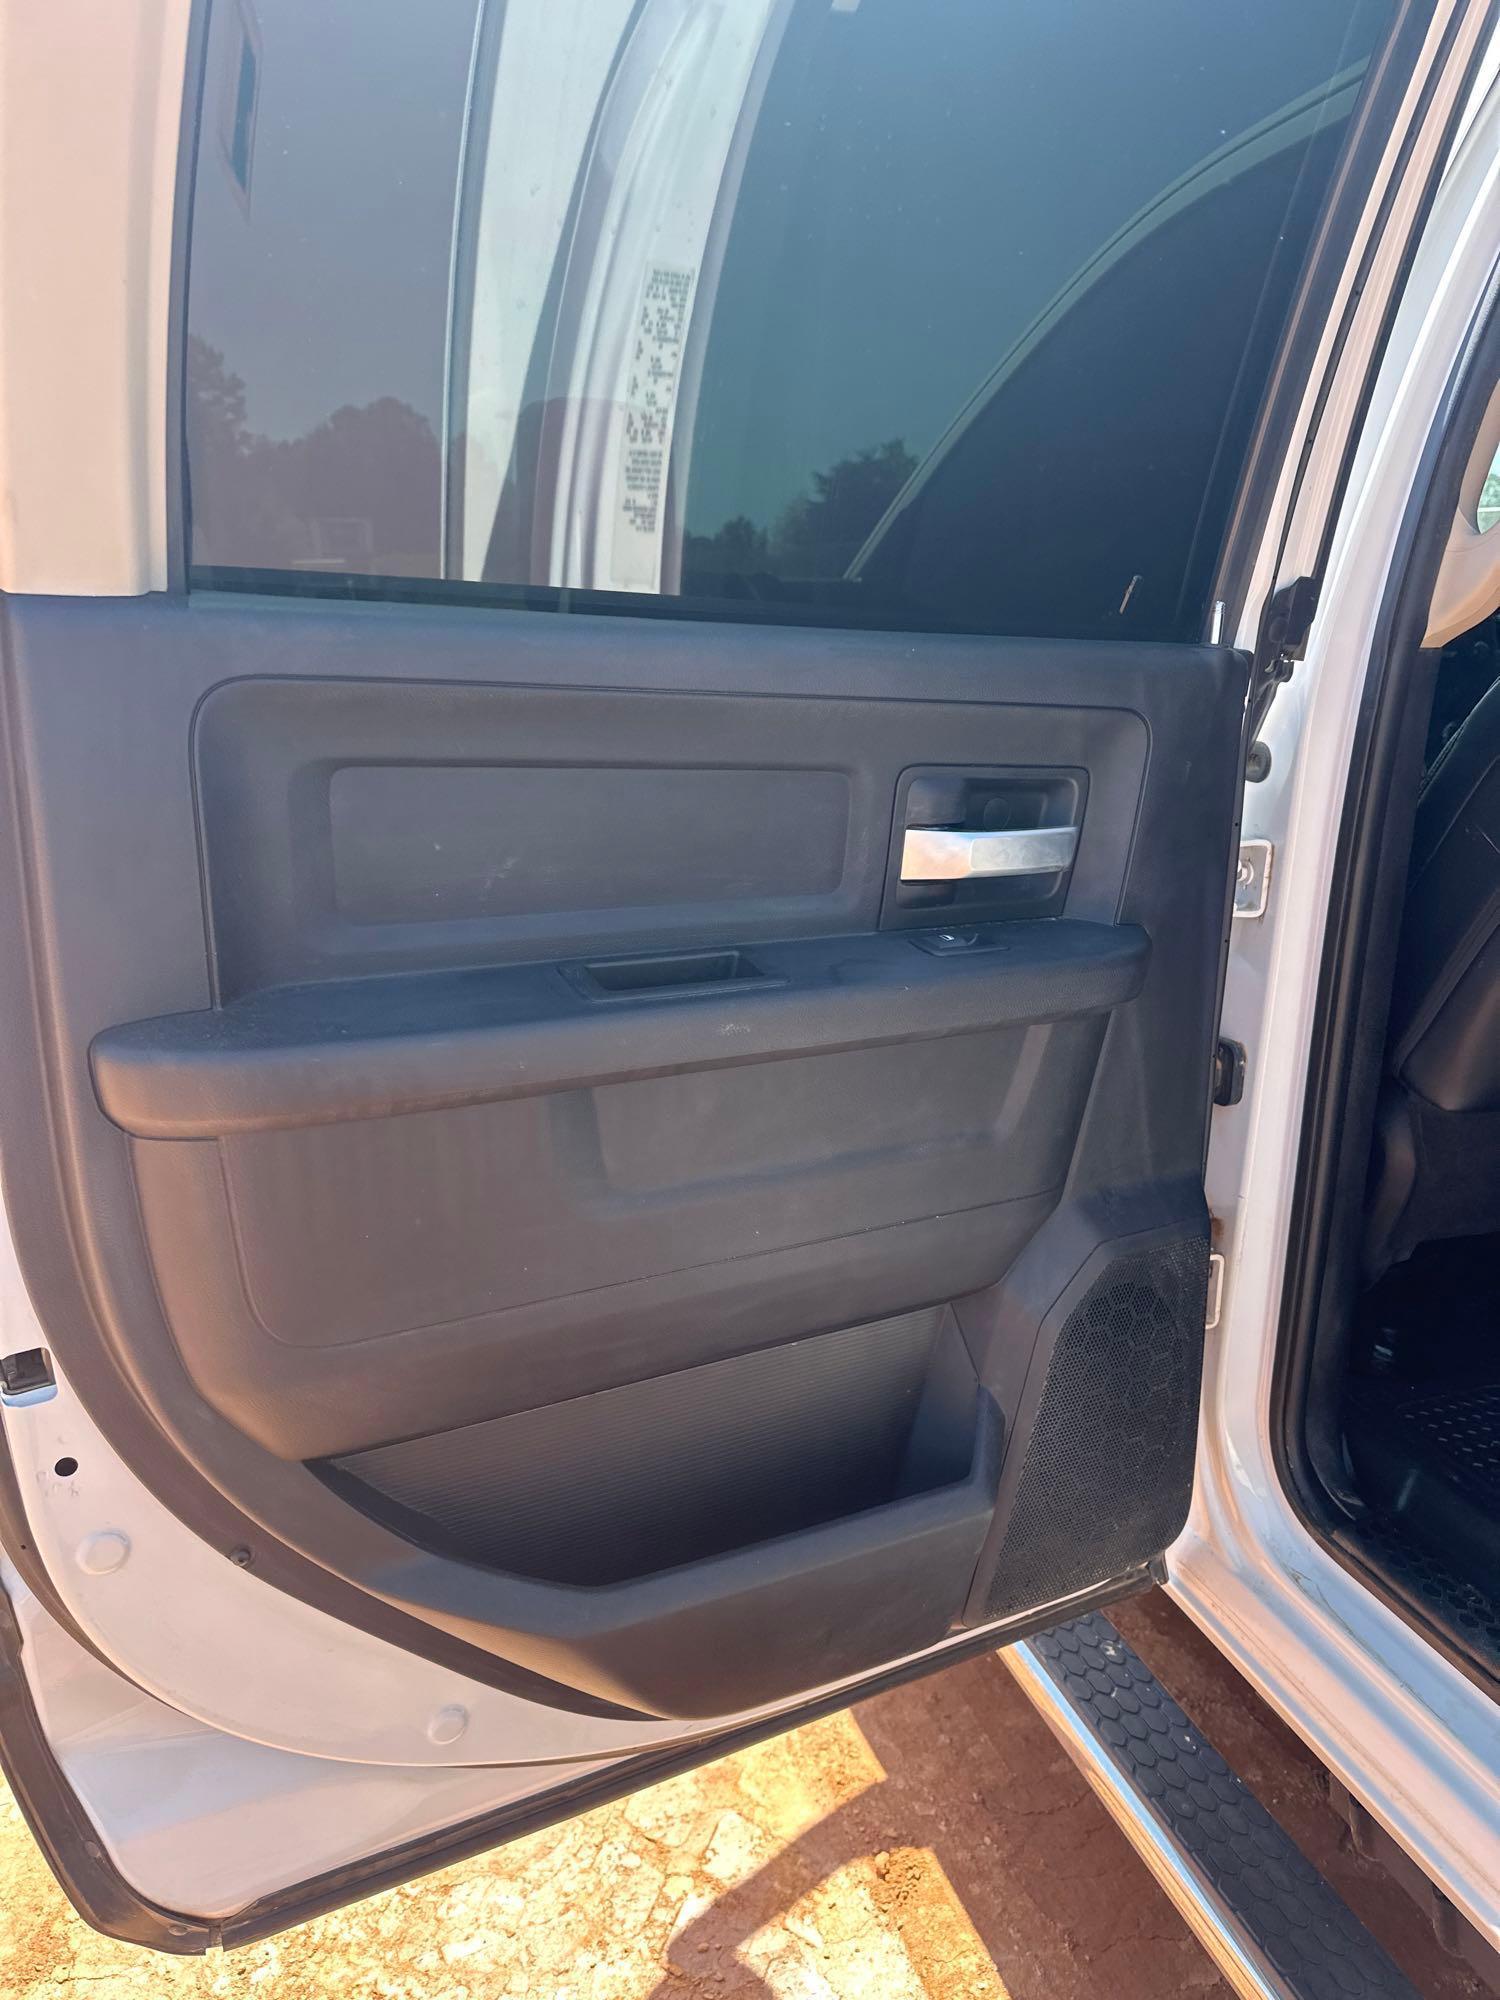 2019 DODGE RAM 3500 S/A CREW CAB SERVICE BODY TRUCK